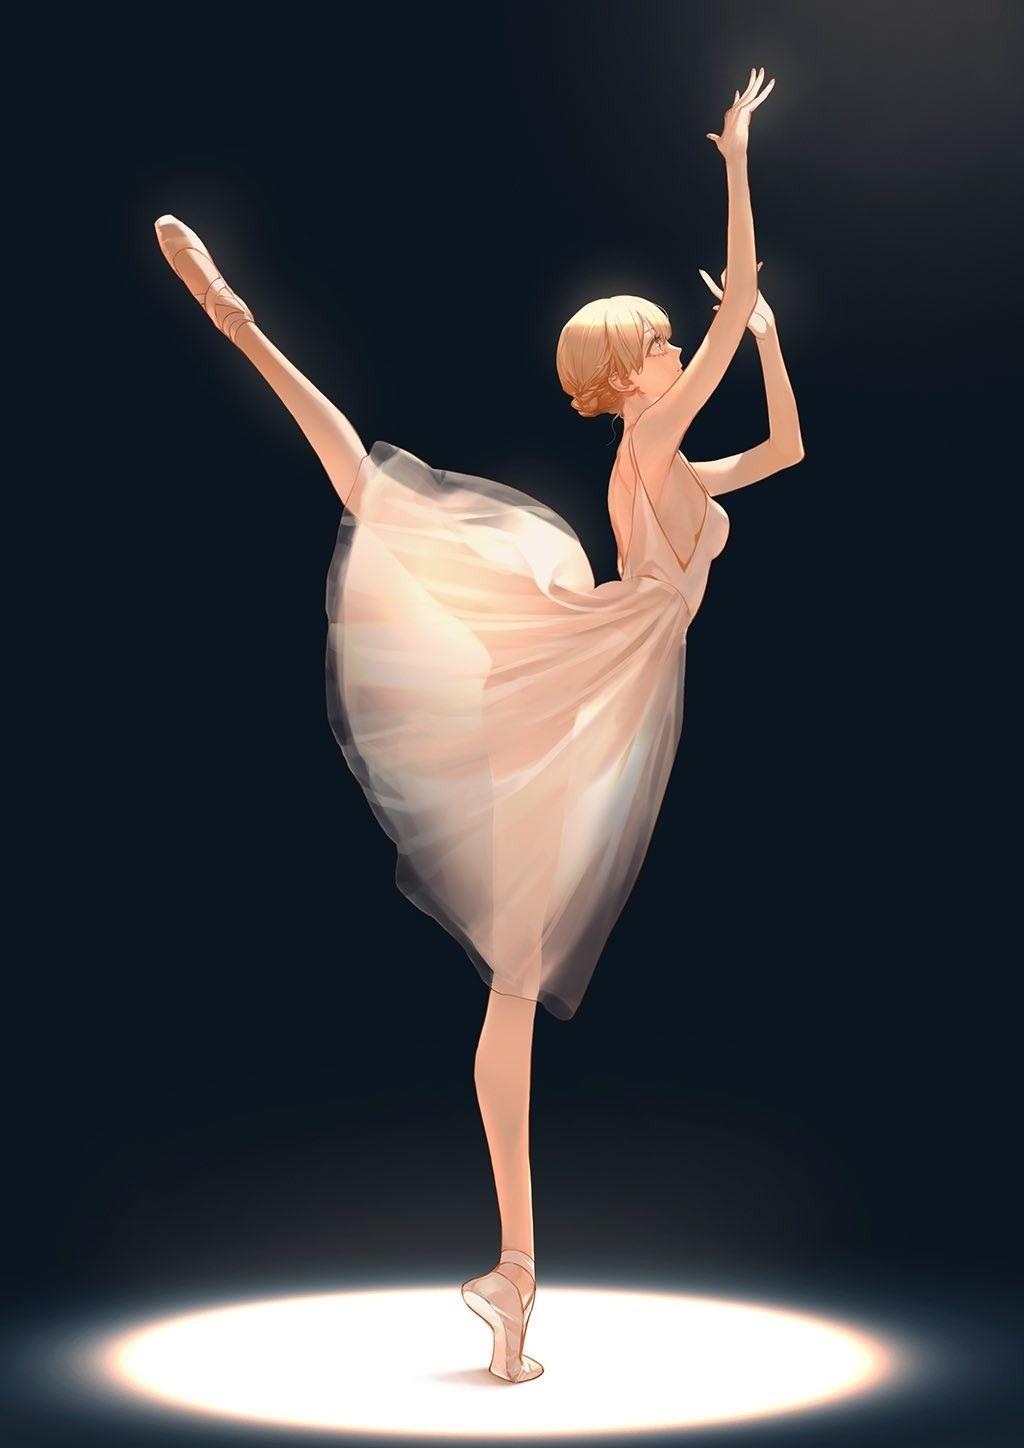 Anime Ballerina Wallpapers - Top Free Anime Ballerina Backgrounds ...